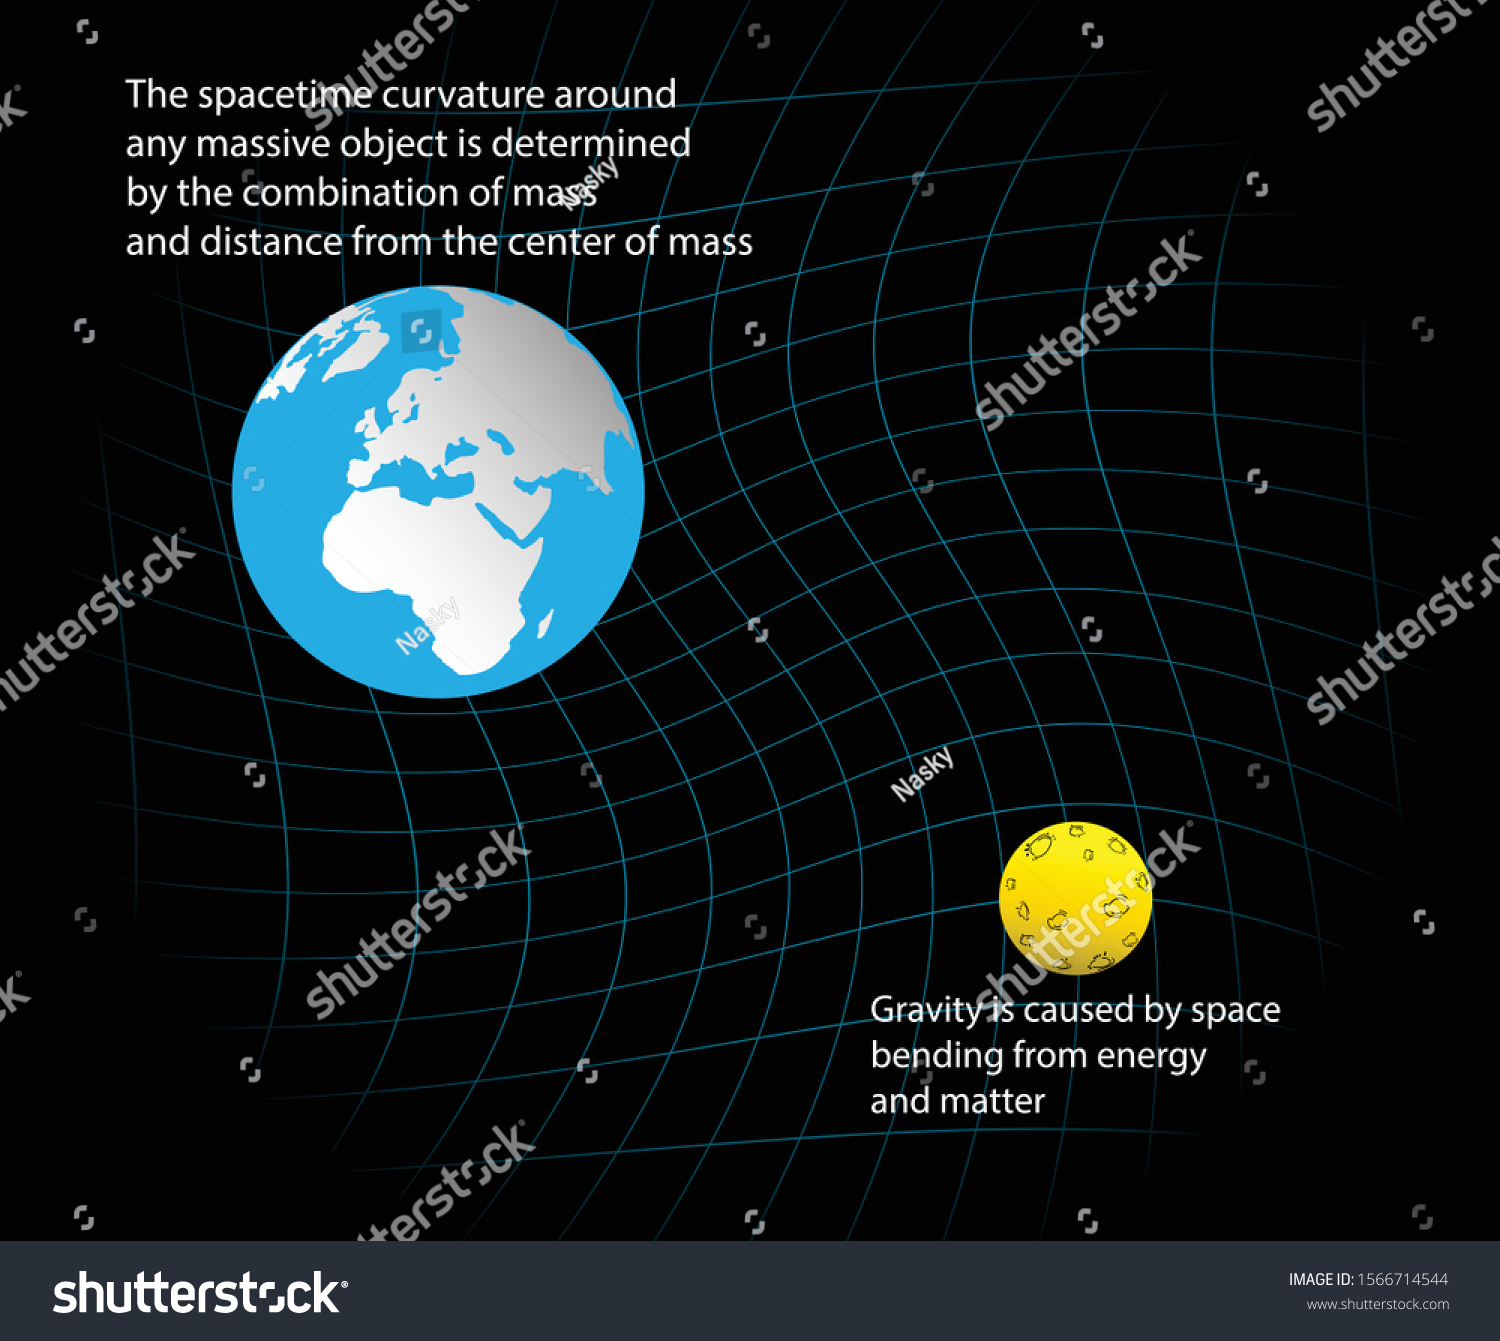 Illustration Physics Astronomy Einsteins Gravity Model Stock Vector Royalty Free 1566714544 8928